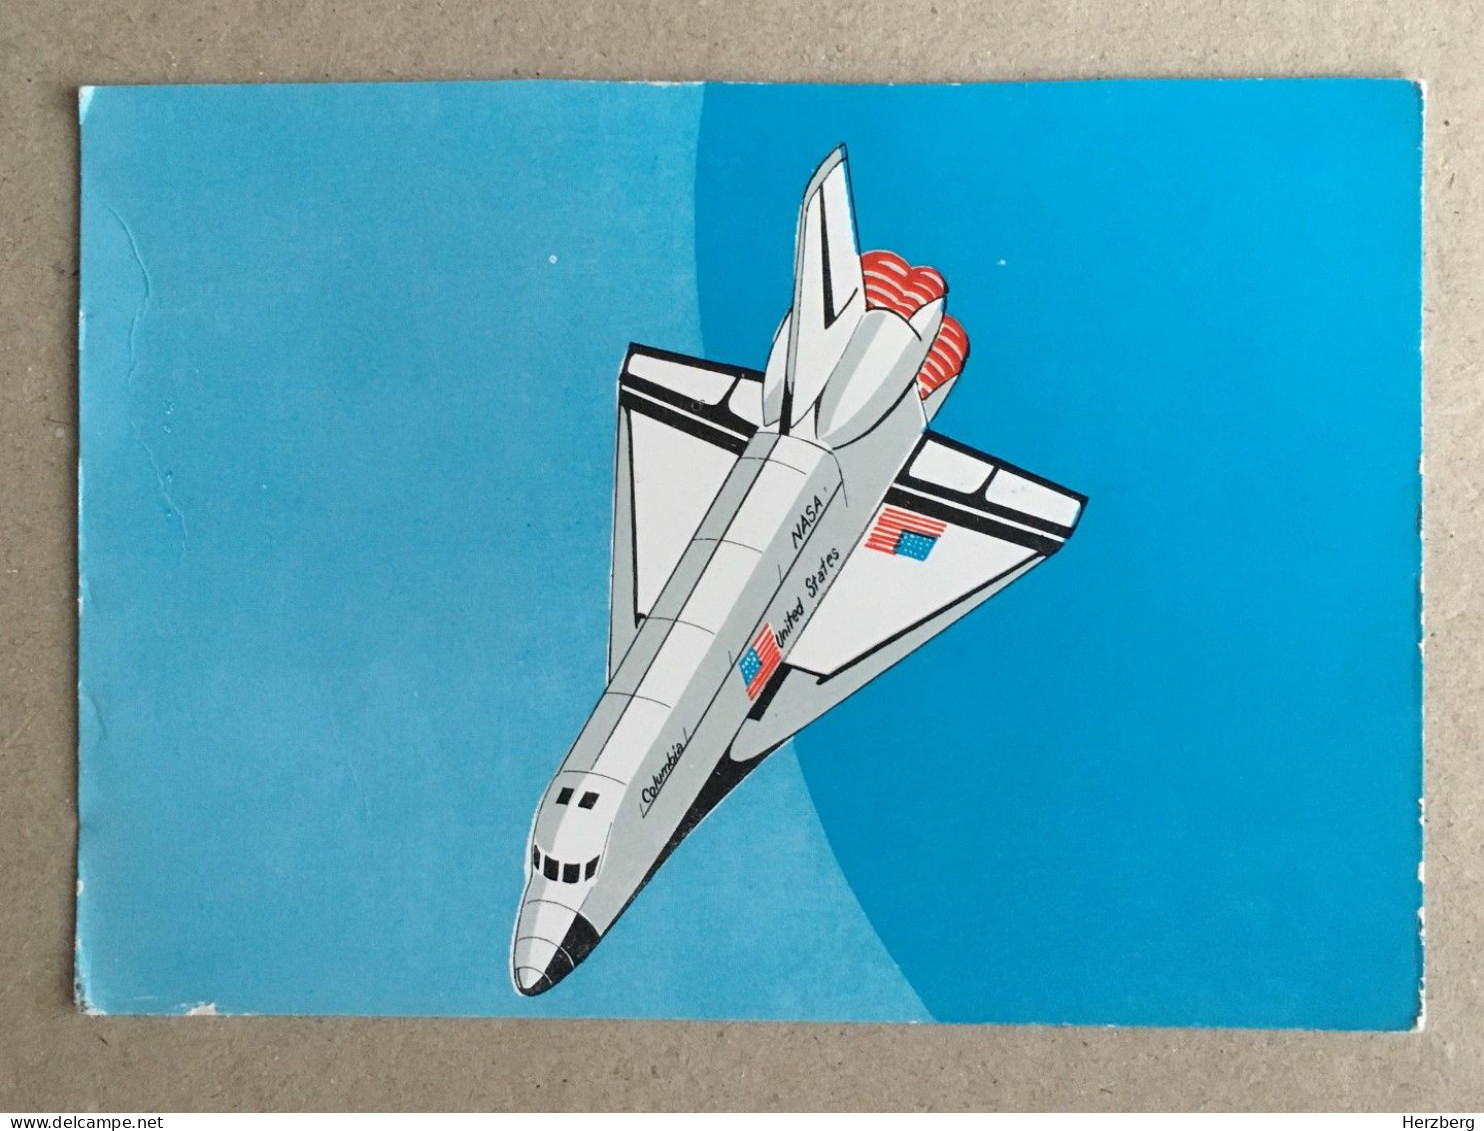 USA United States Of America Spaceship Columbia Space Shuttle 1981 - 2003 - Raumfahrt